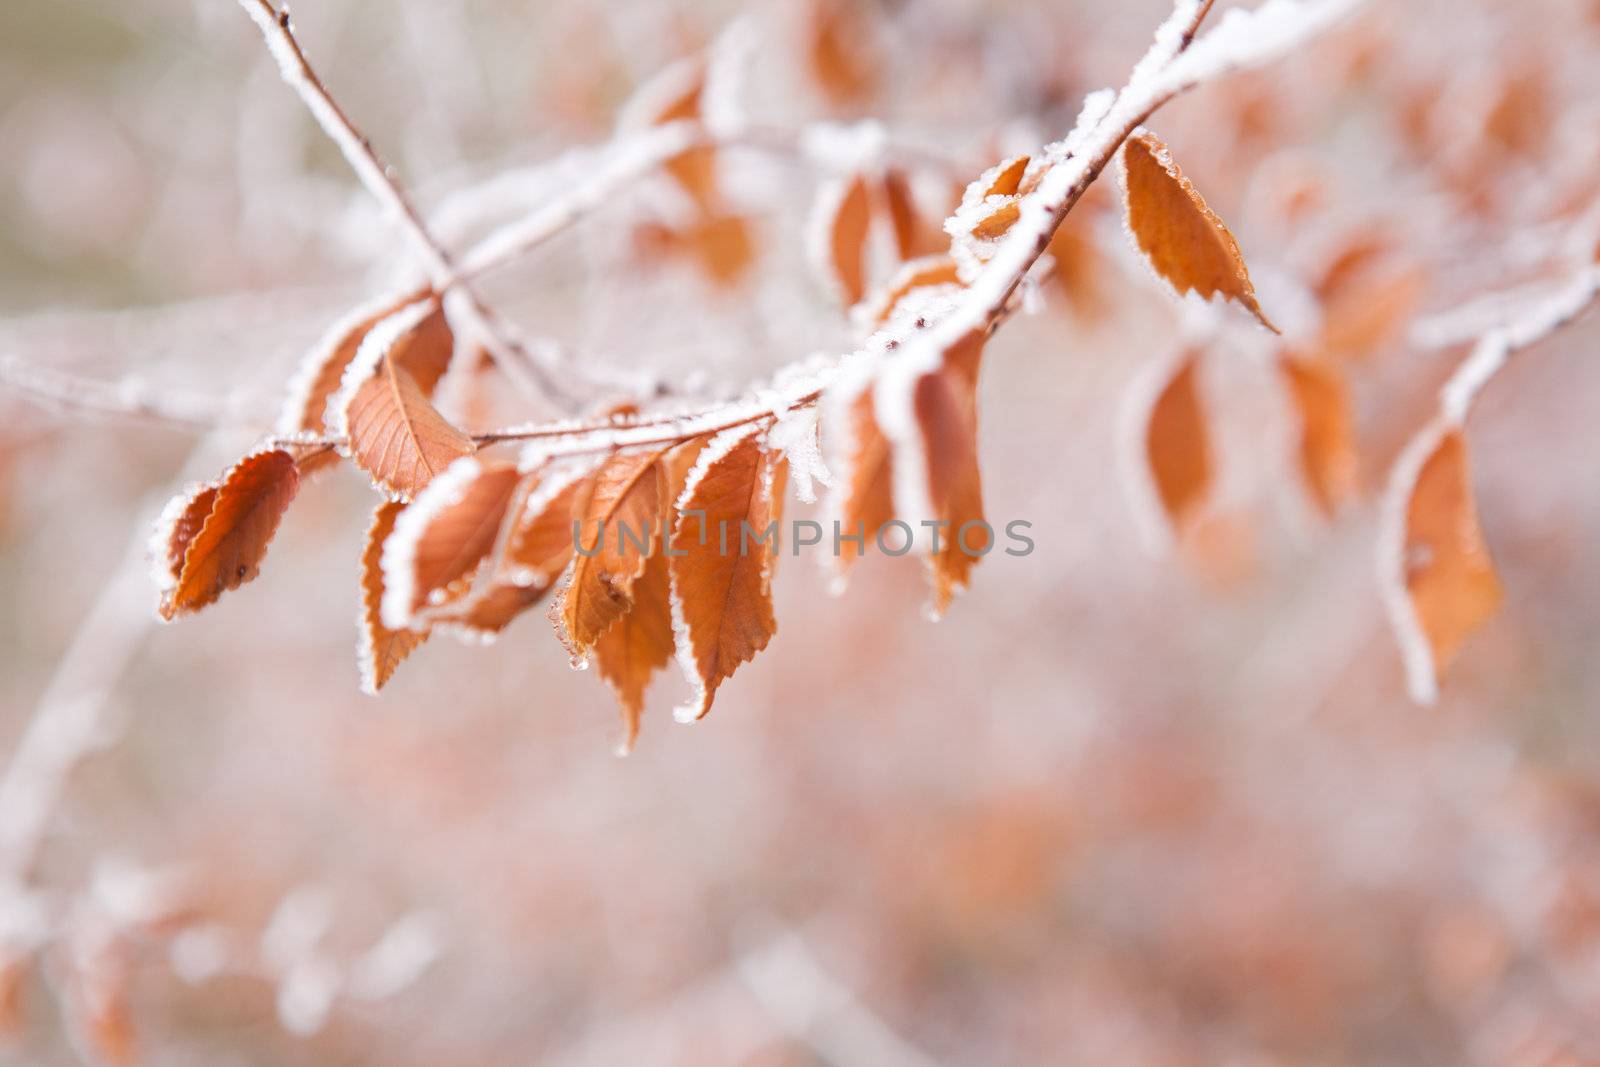 frozen leaves under the frost by vsurkov